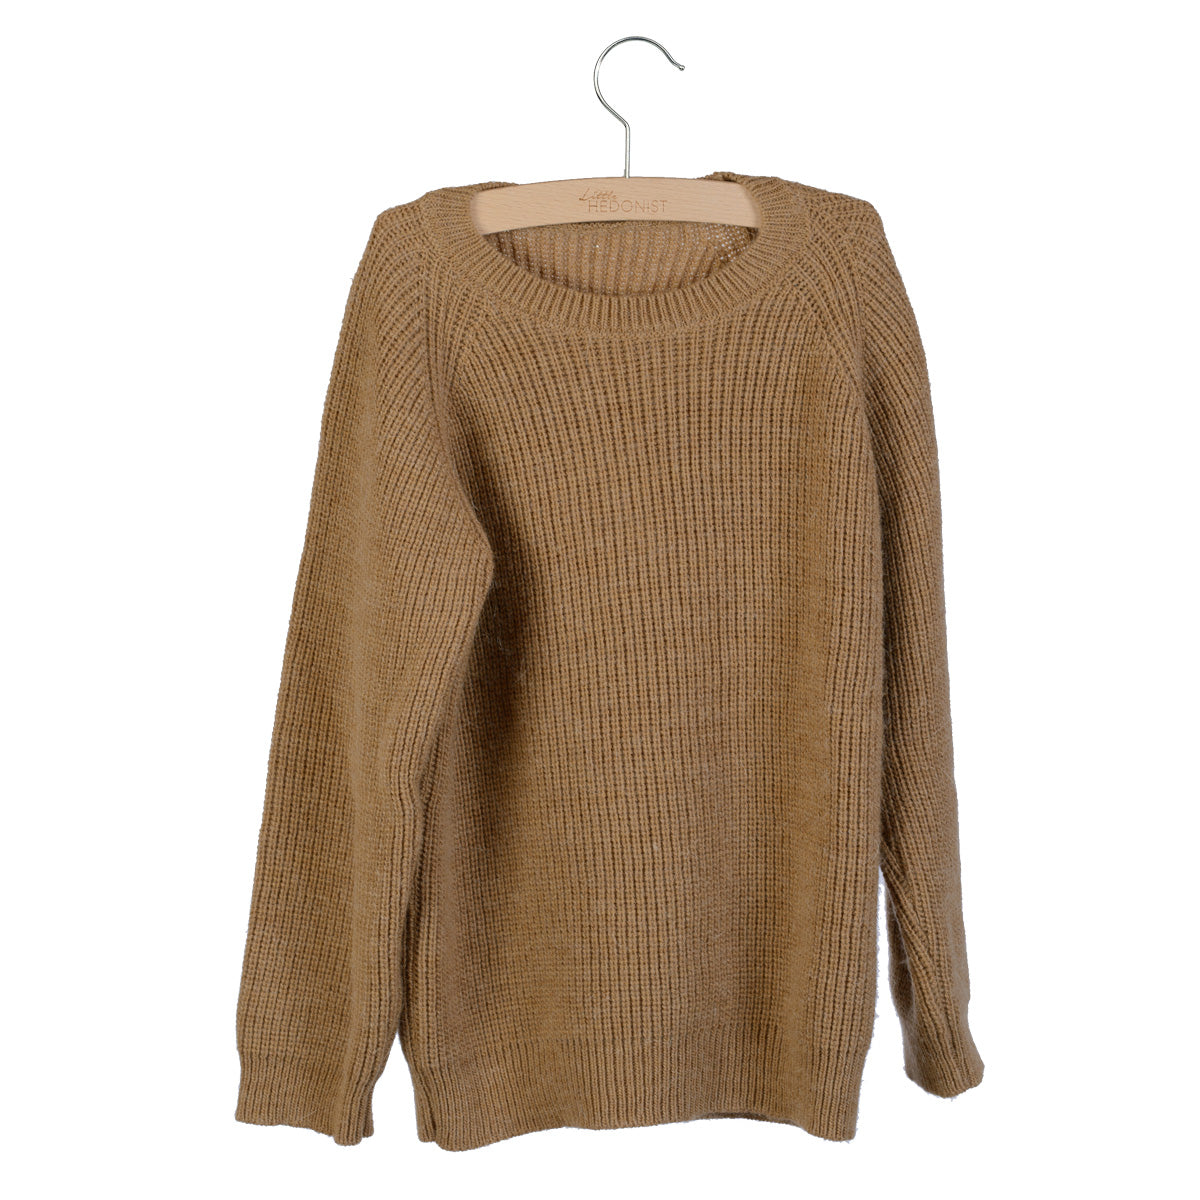 LITTLE HEDONIST - Pull en tricot marron neuf - 5 ans